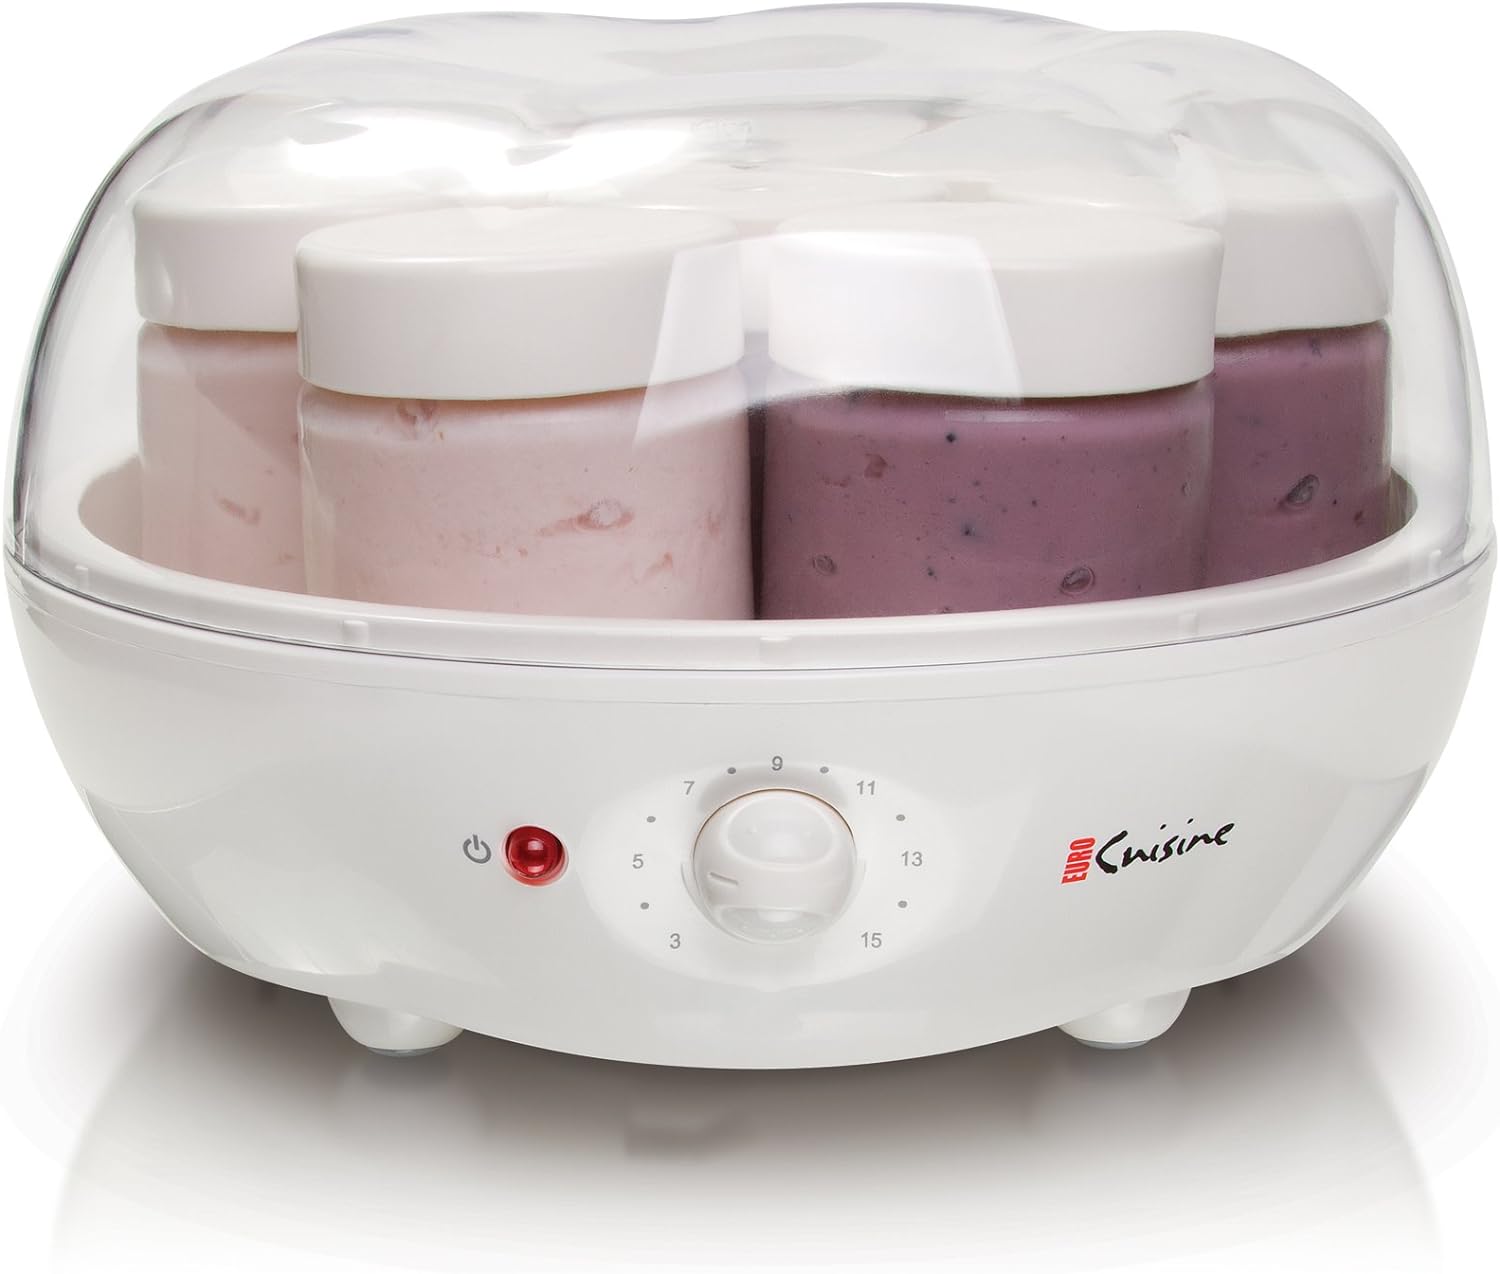 [o美國直購] Euro-Cuisine YM100 Automatic Yogurt Maker 轉盤 定時 優格製作機 優格機